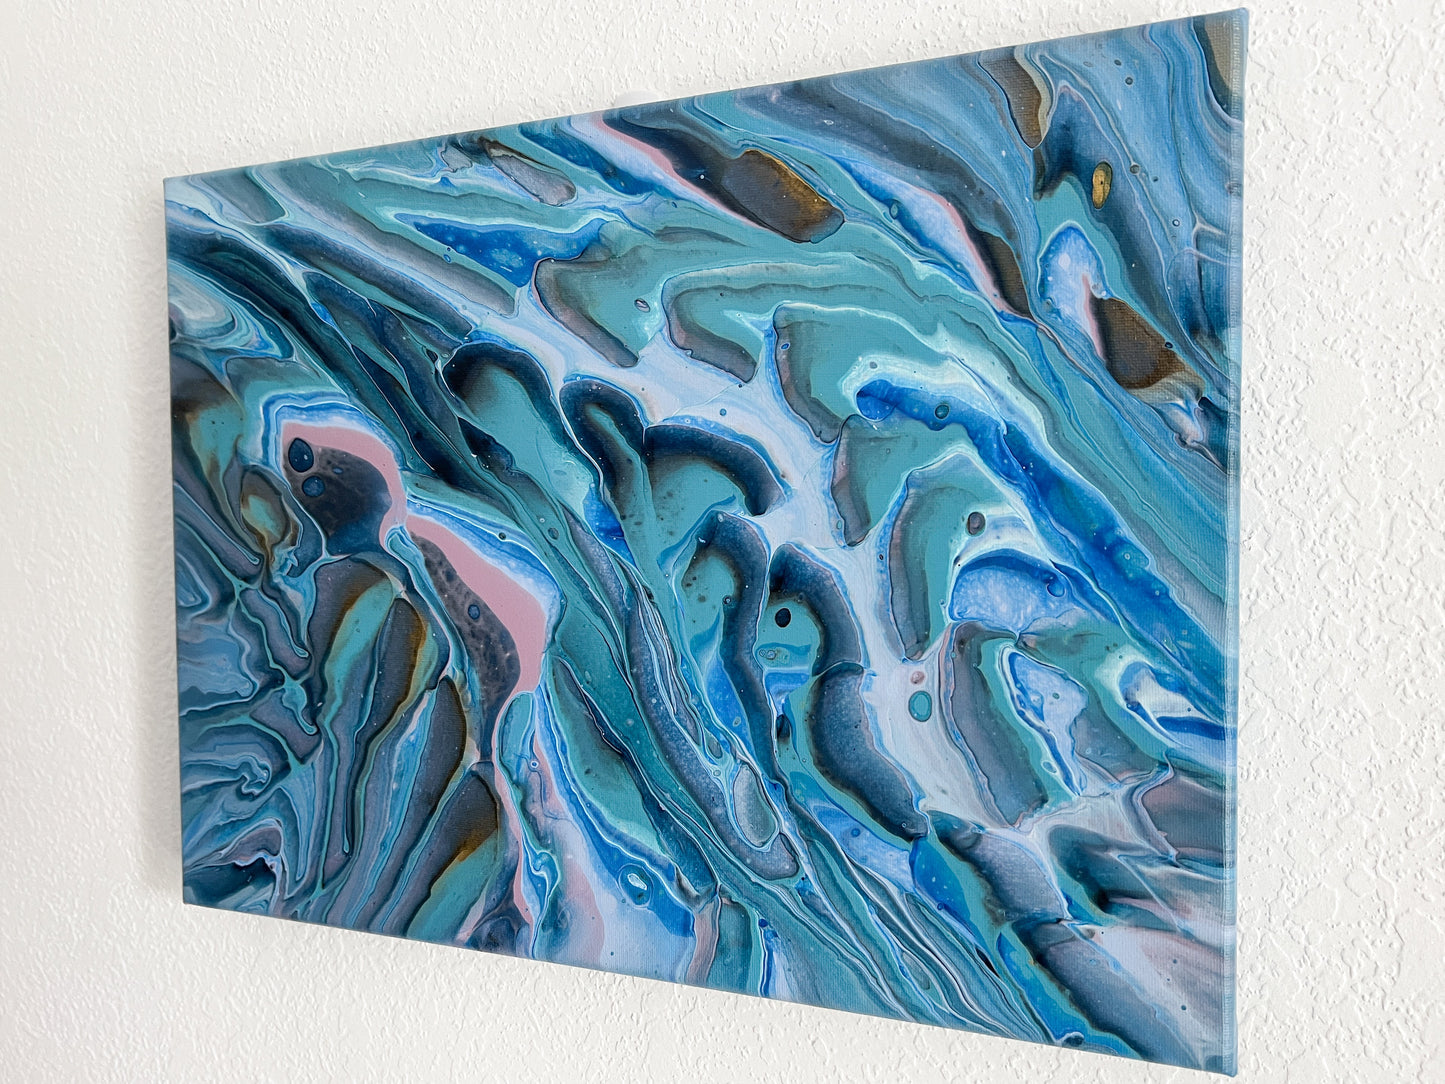 shades of blue fluid art painting - Melissa Talbott